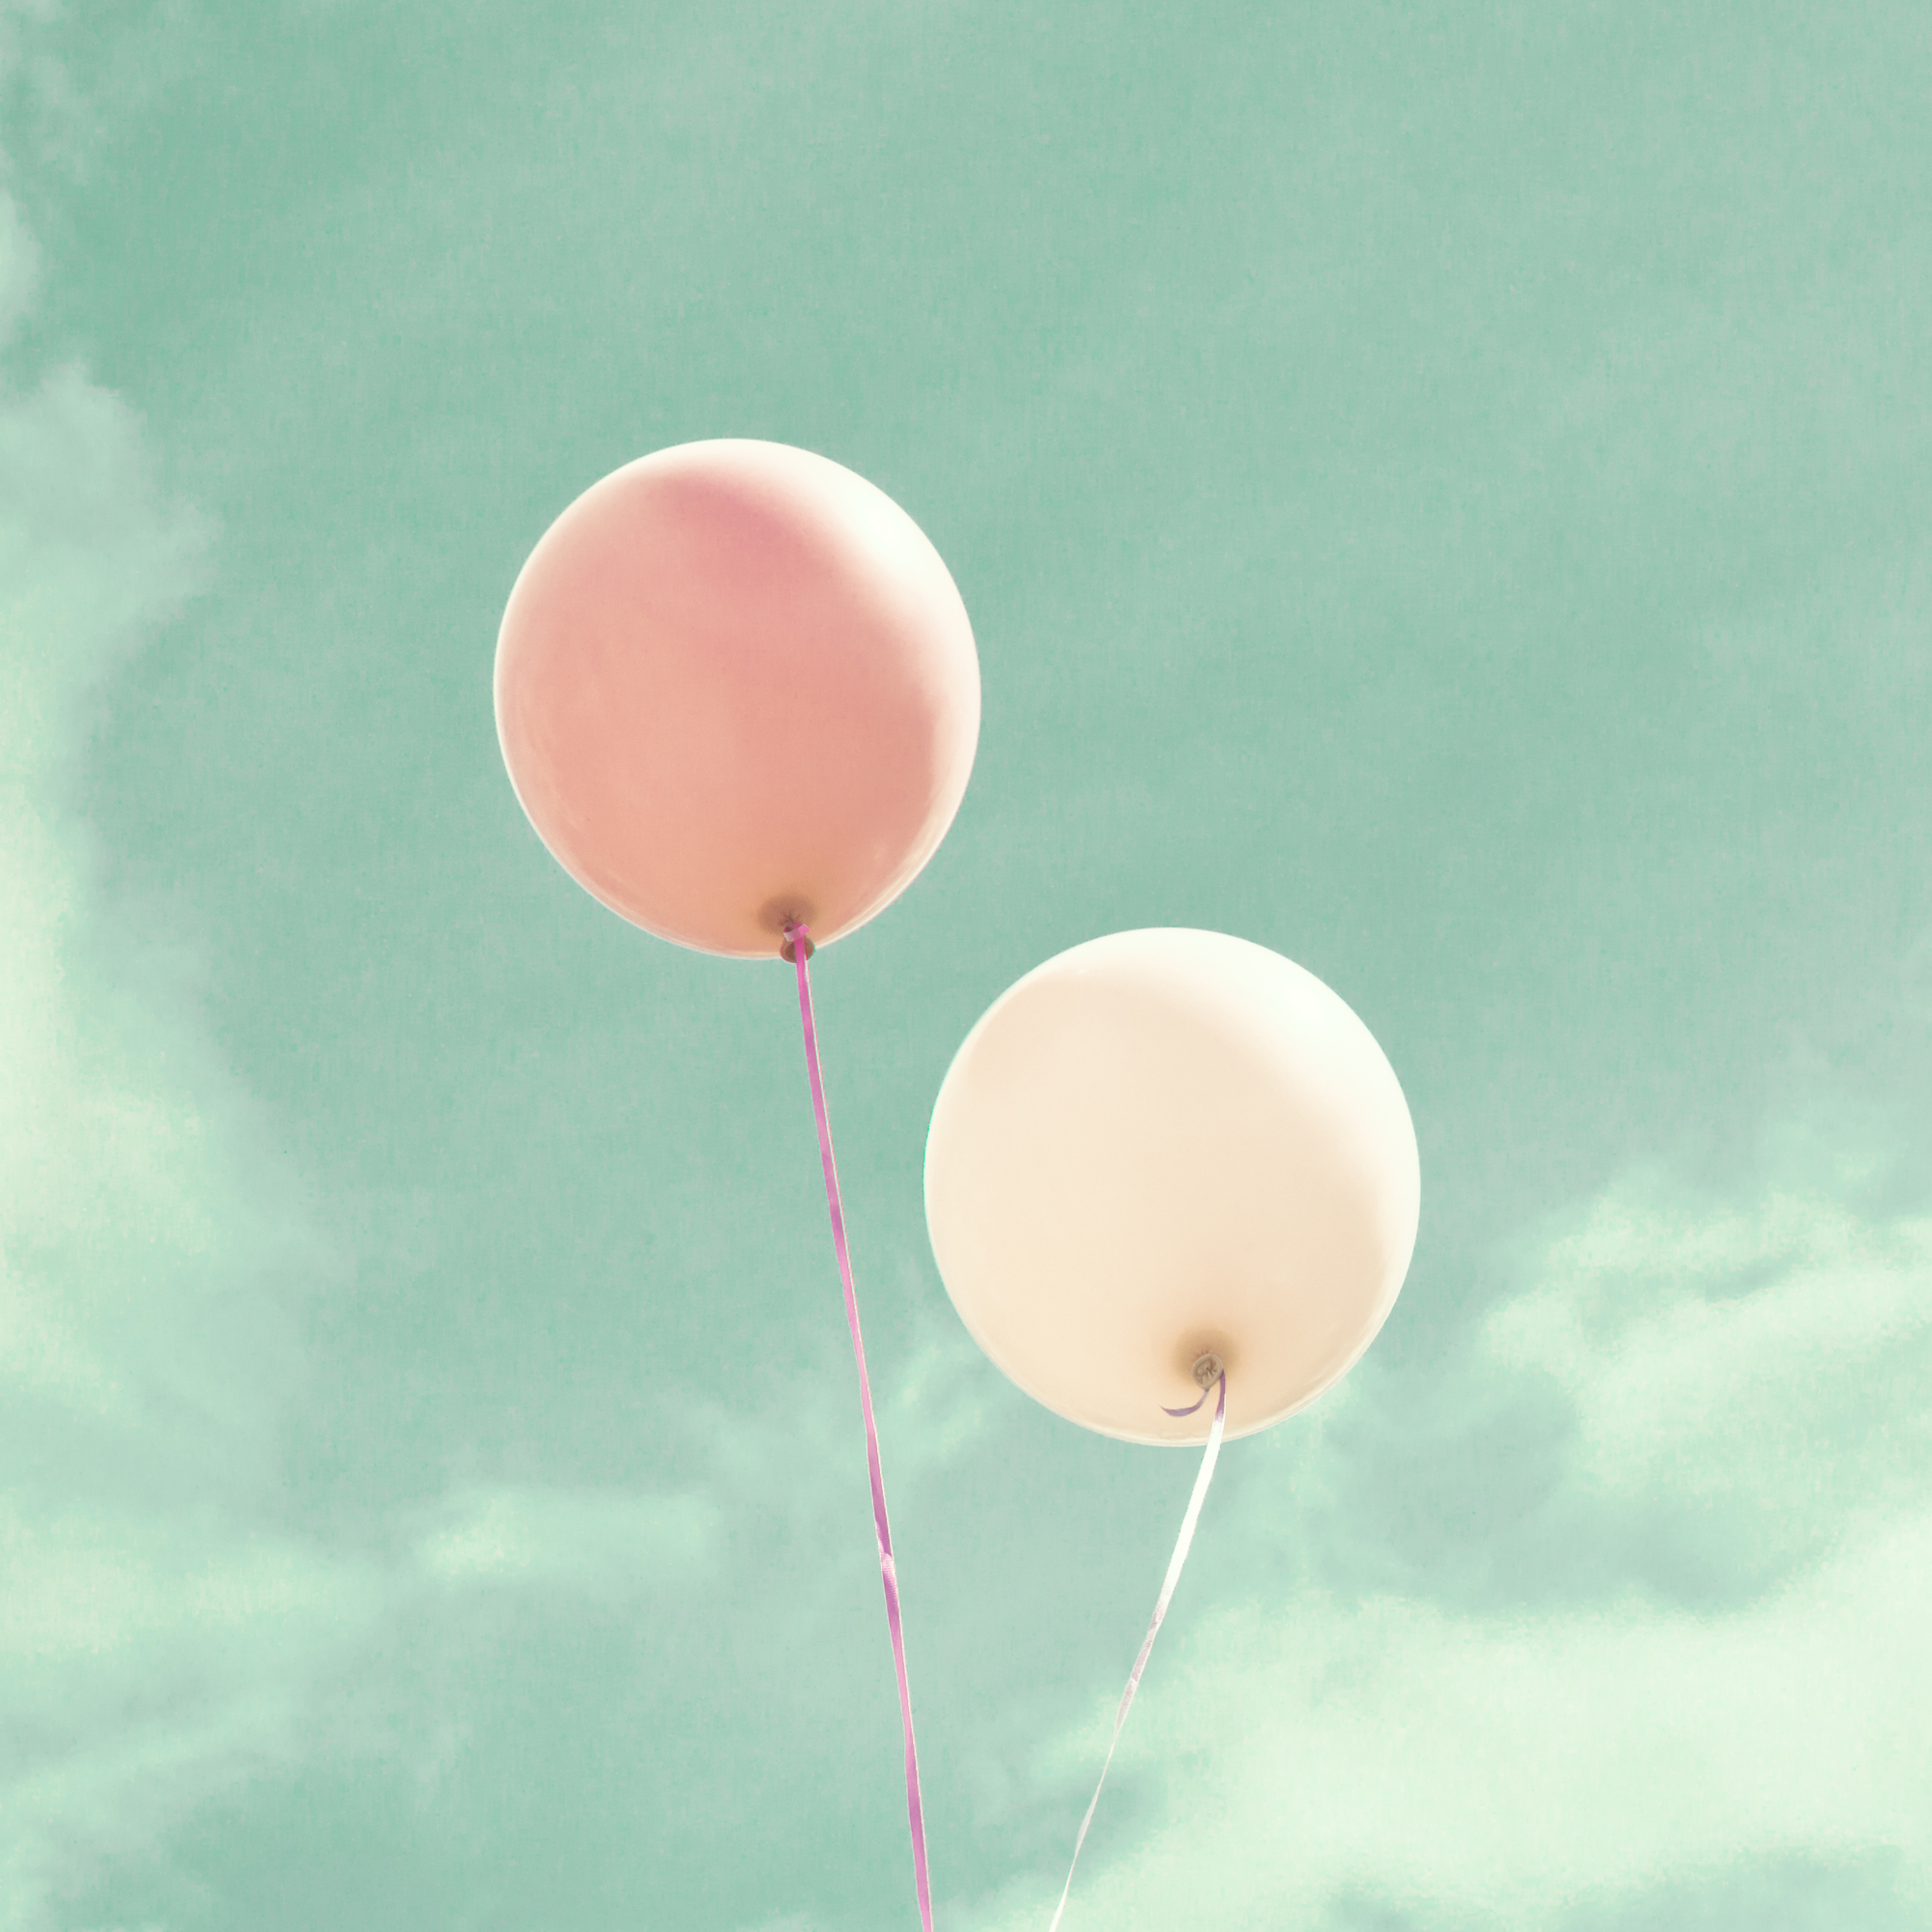 helijumski baloni, foto: Depositphotos/andrekaphoto